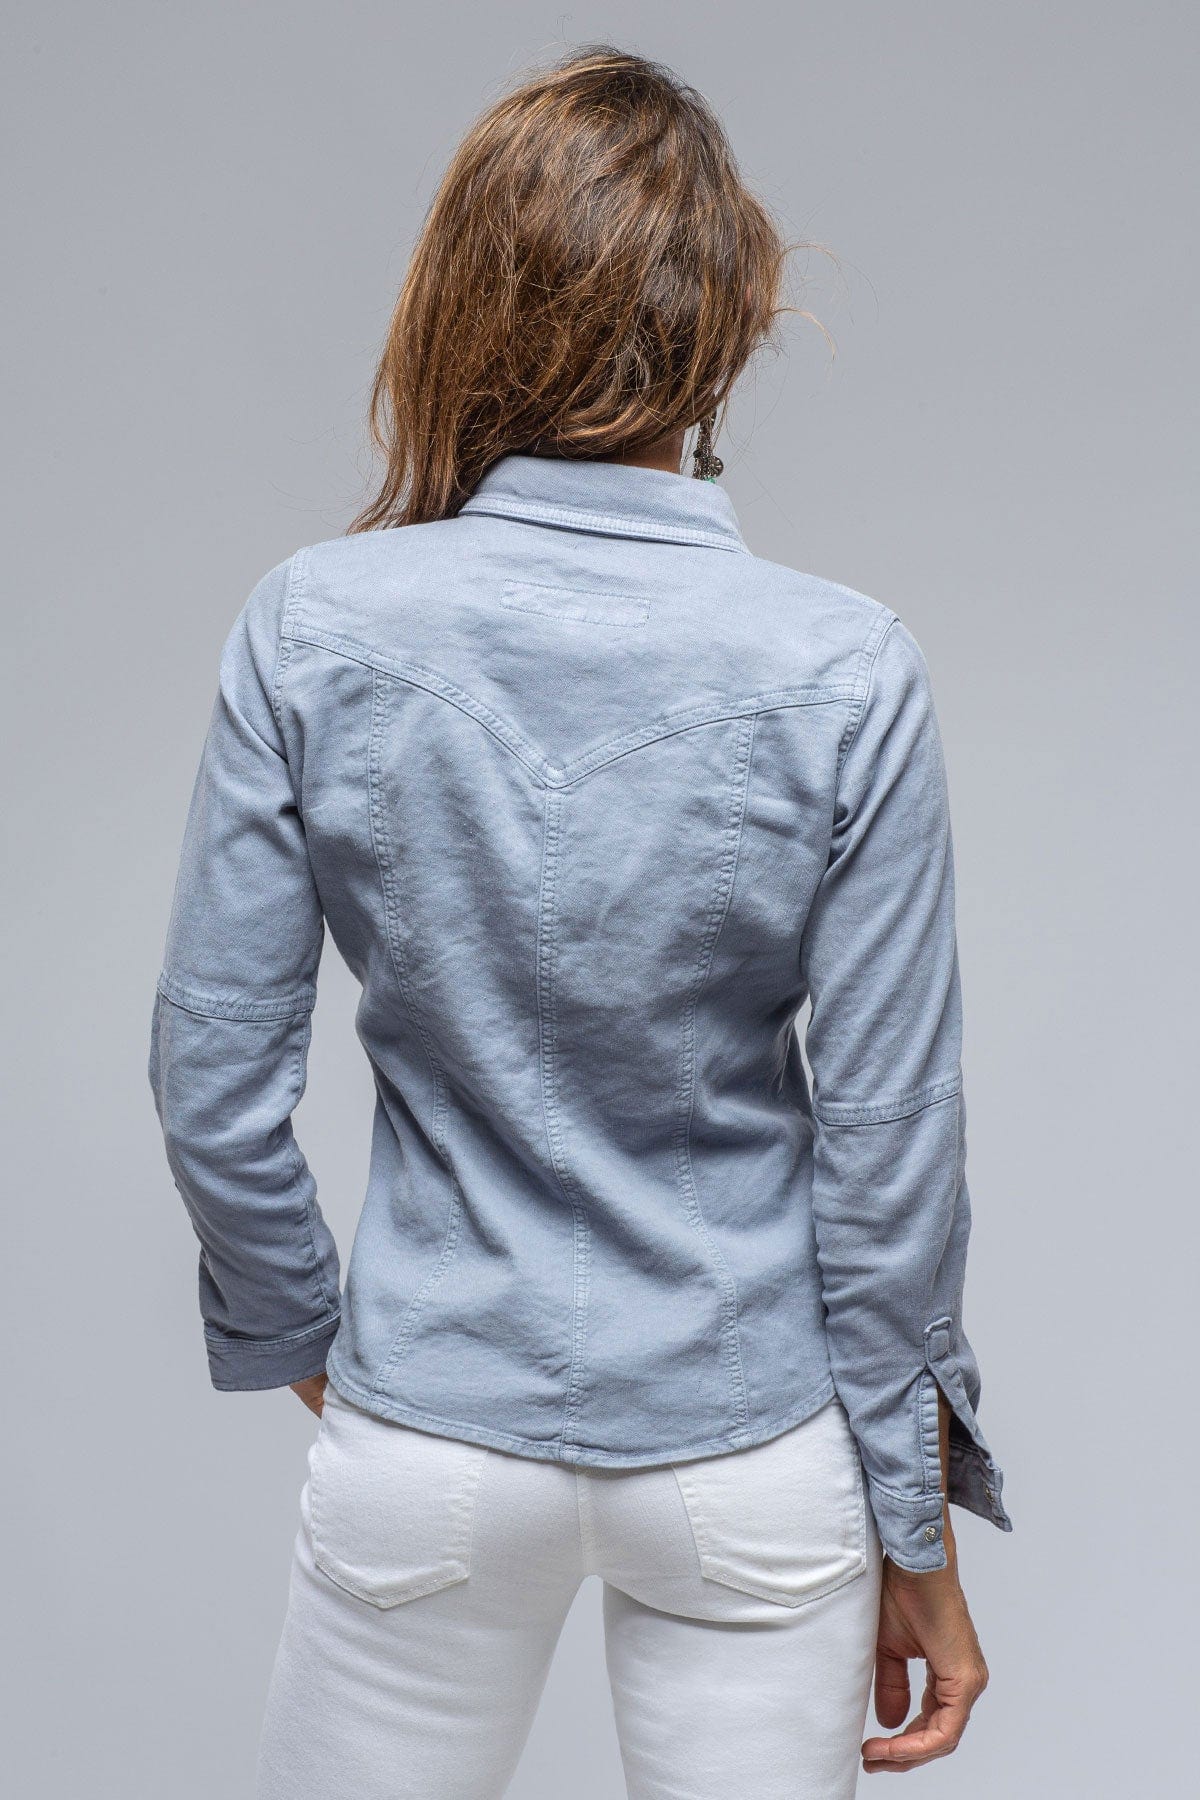 Yarmony Linen Cotton Denim Shirt In Lavender - AXEL'S